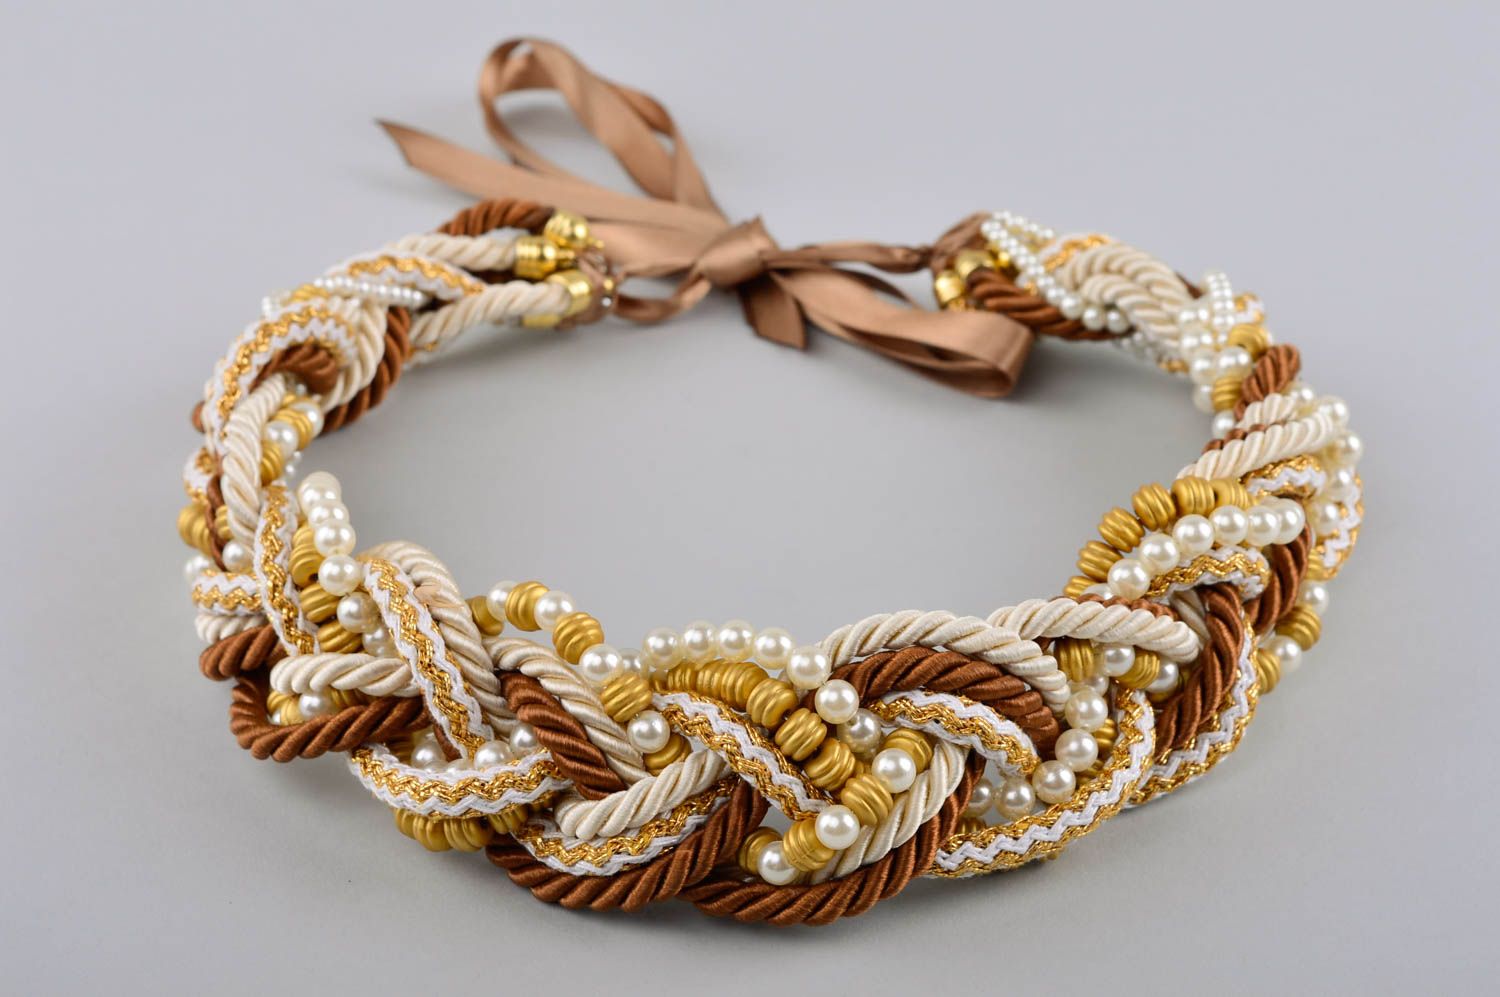 Designer lovely necklace unusual accessory for girls handmade stylish jewelry photo 2